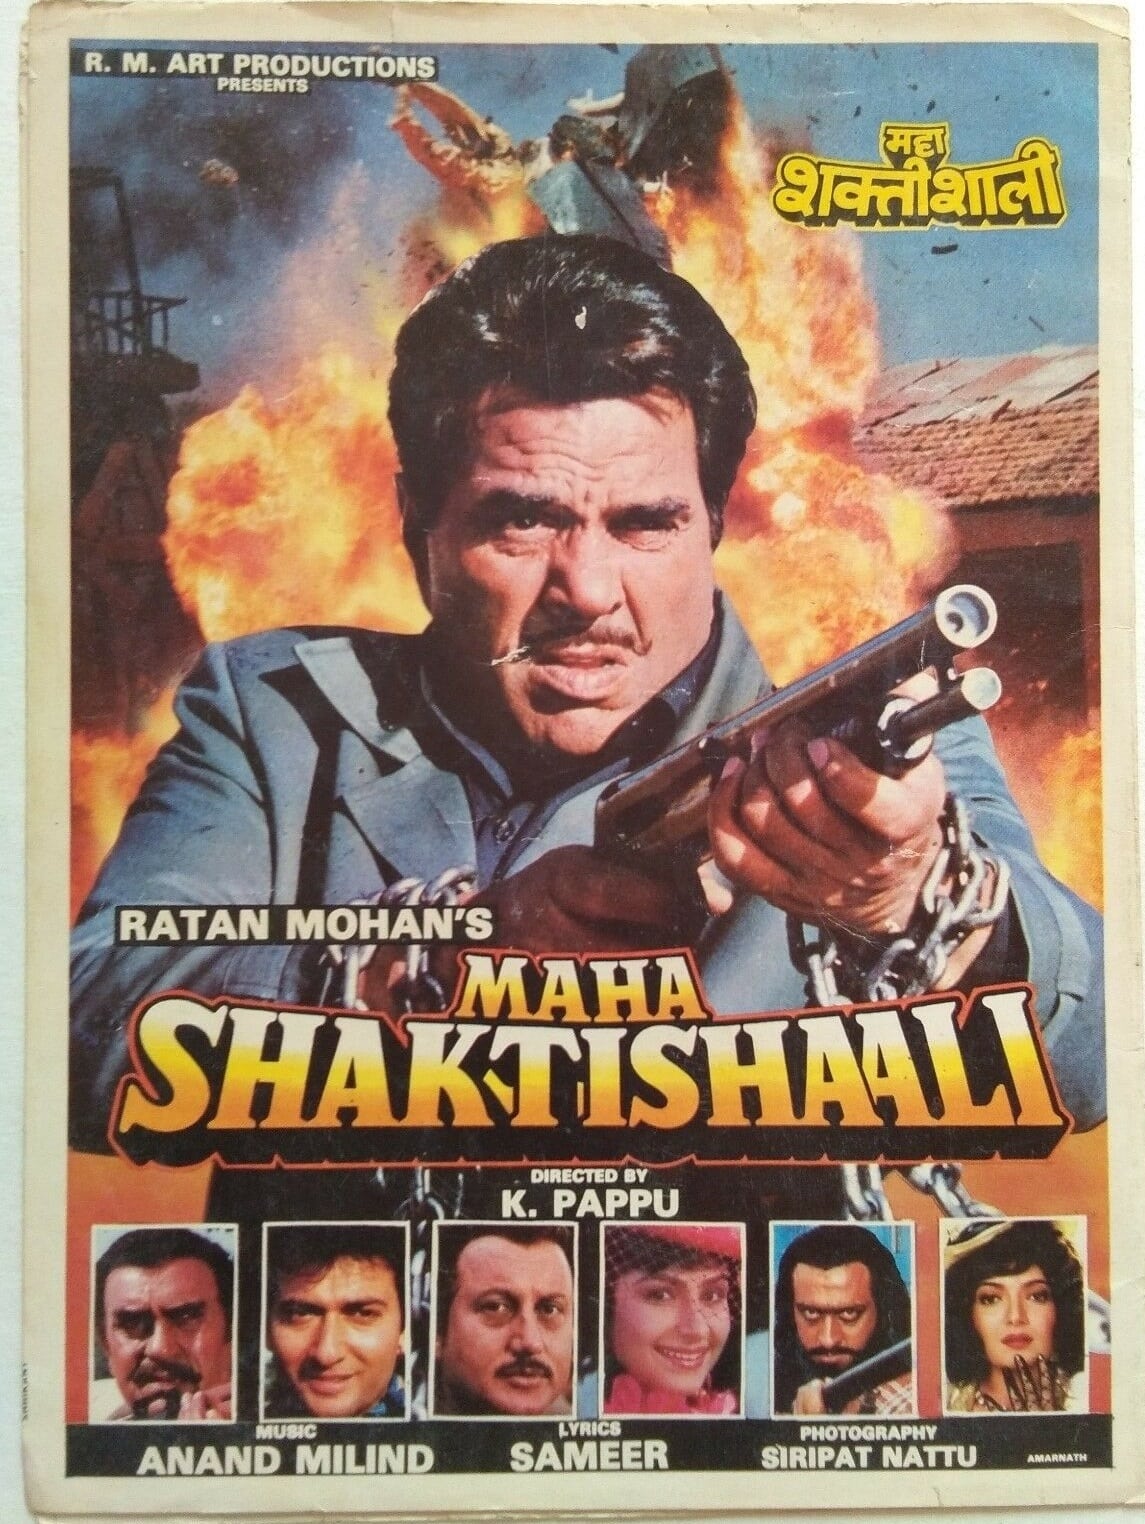 Maha Shaktishaali